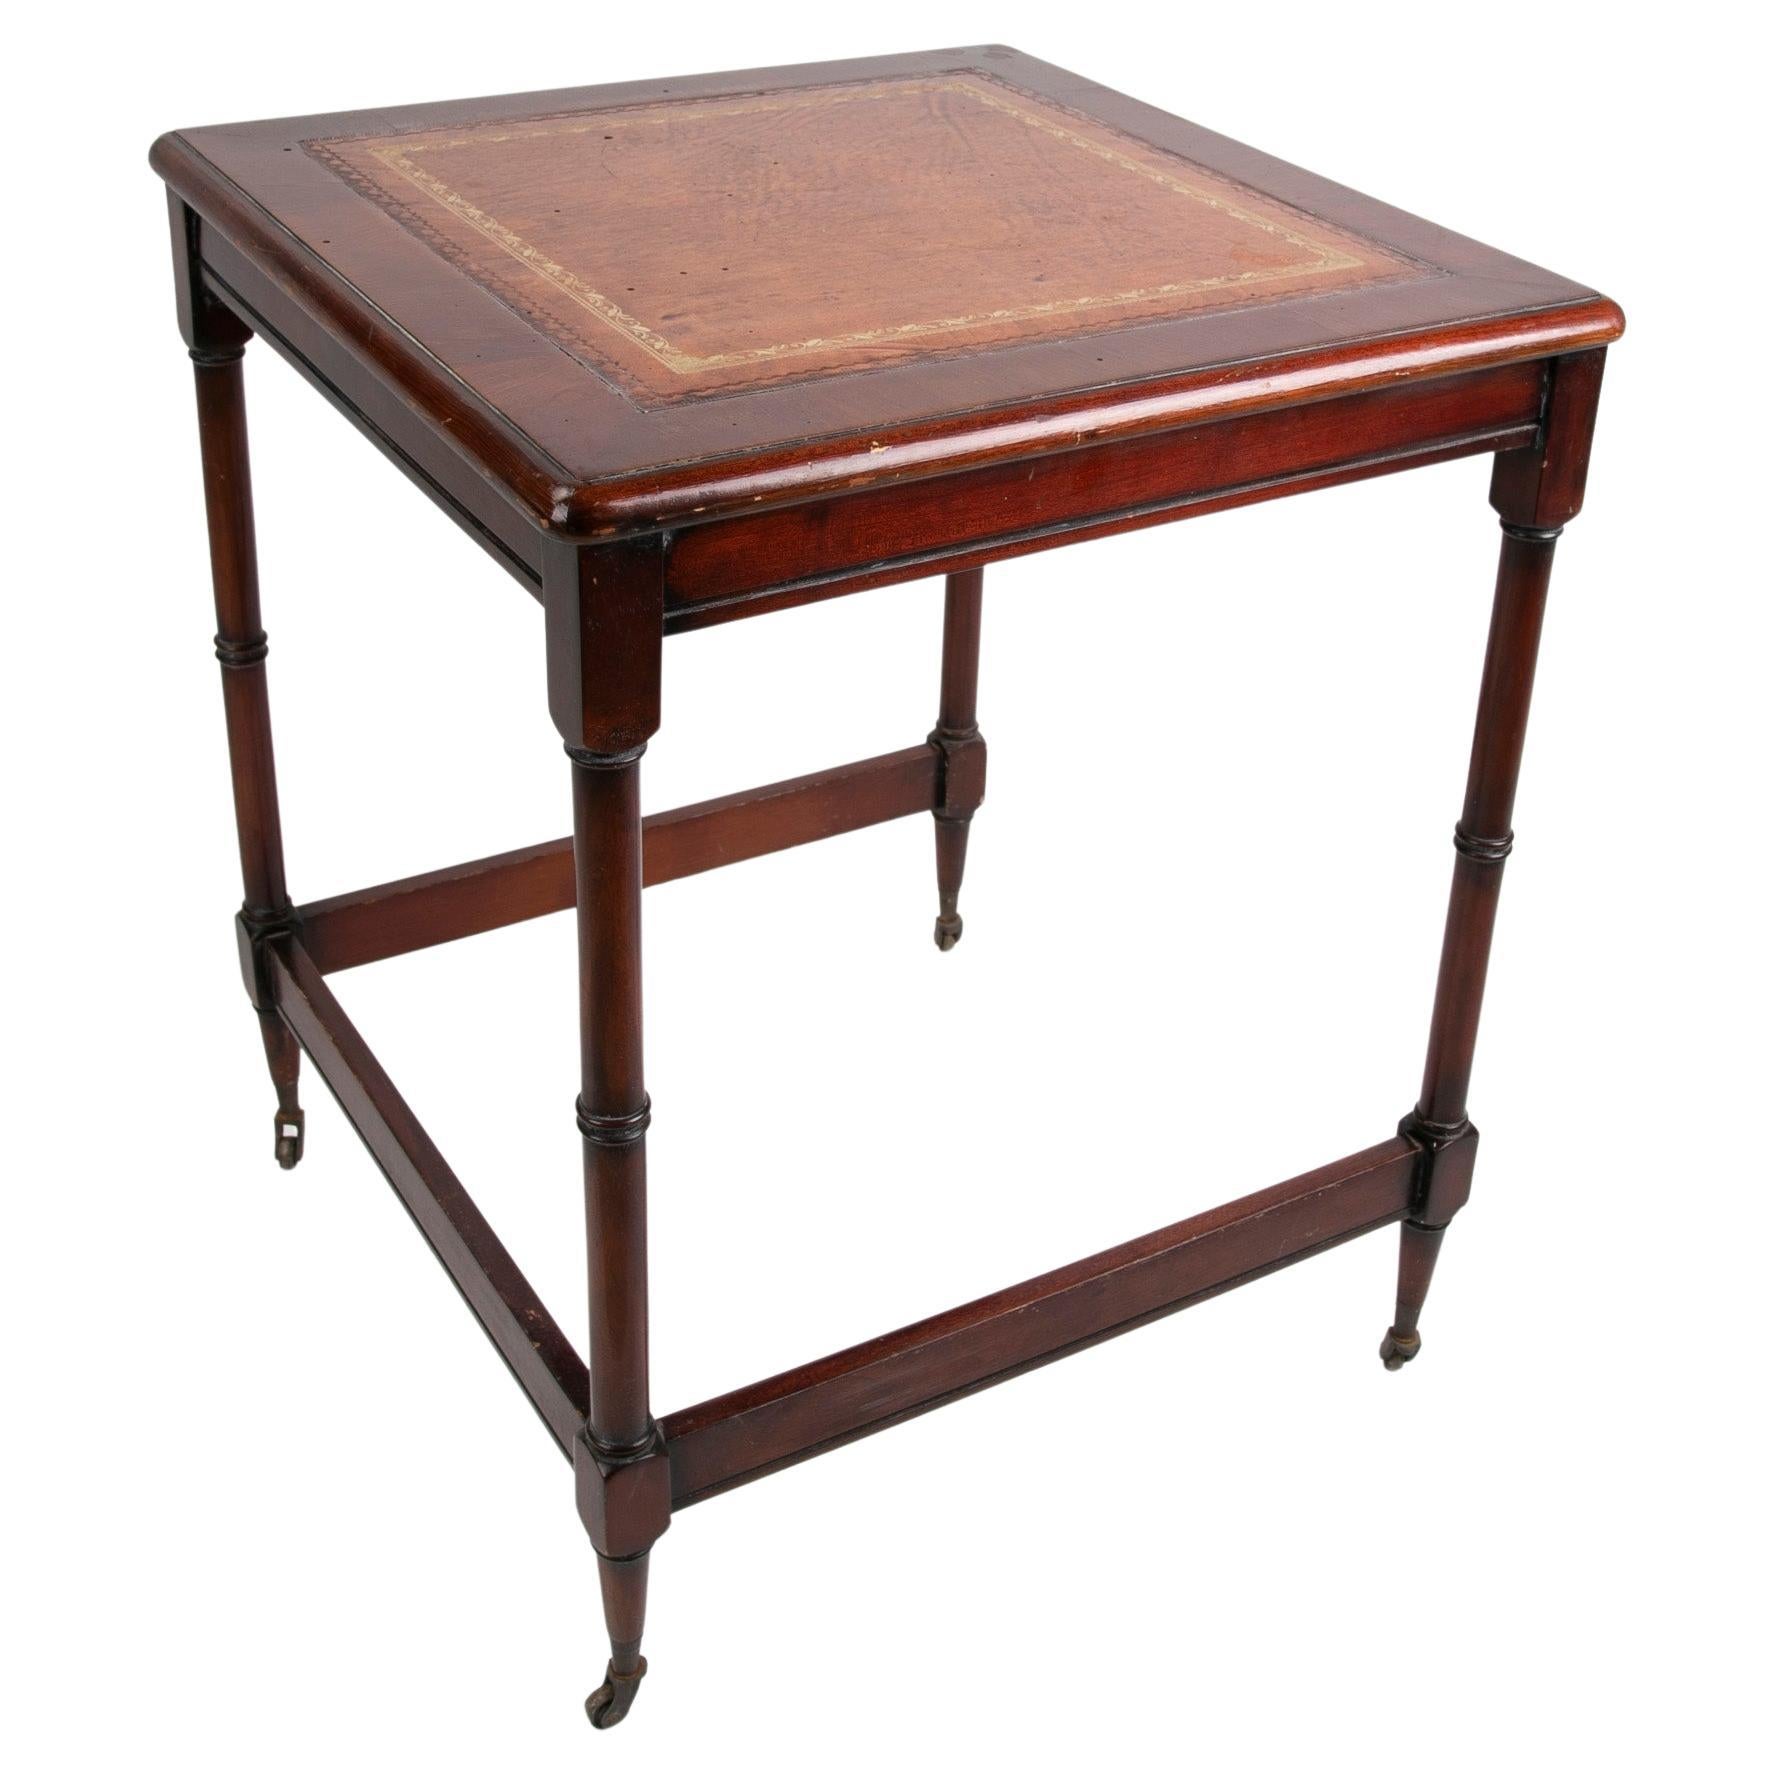 19th Century, English Mahogany Side Table with Castors with Mahogany Table Top